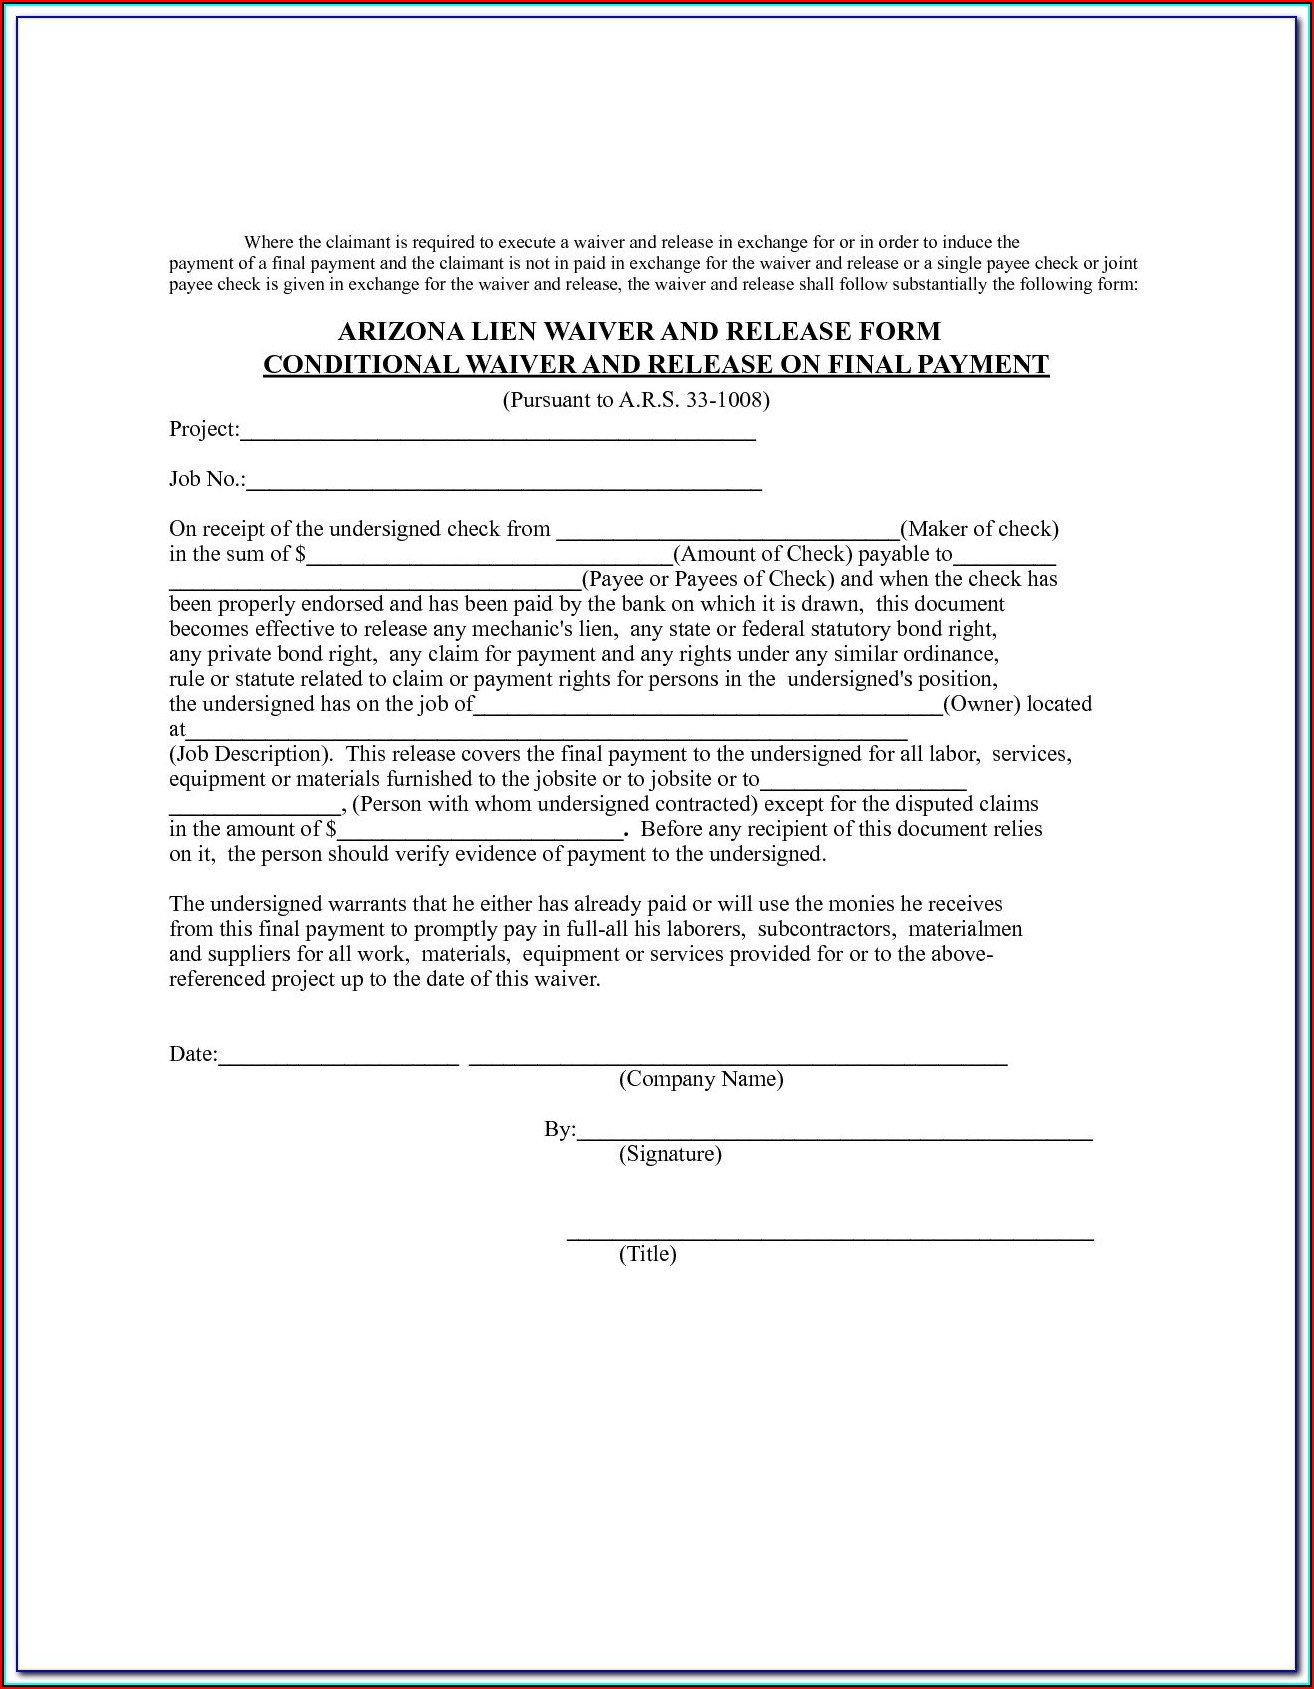 E Verify Subcontractor Affidavit Form